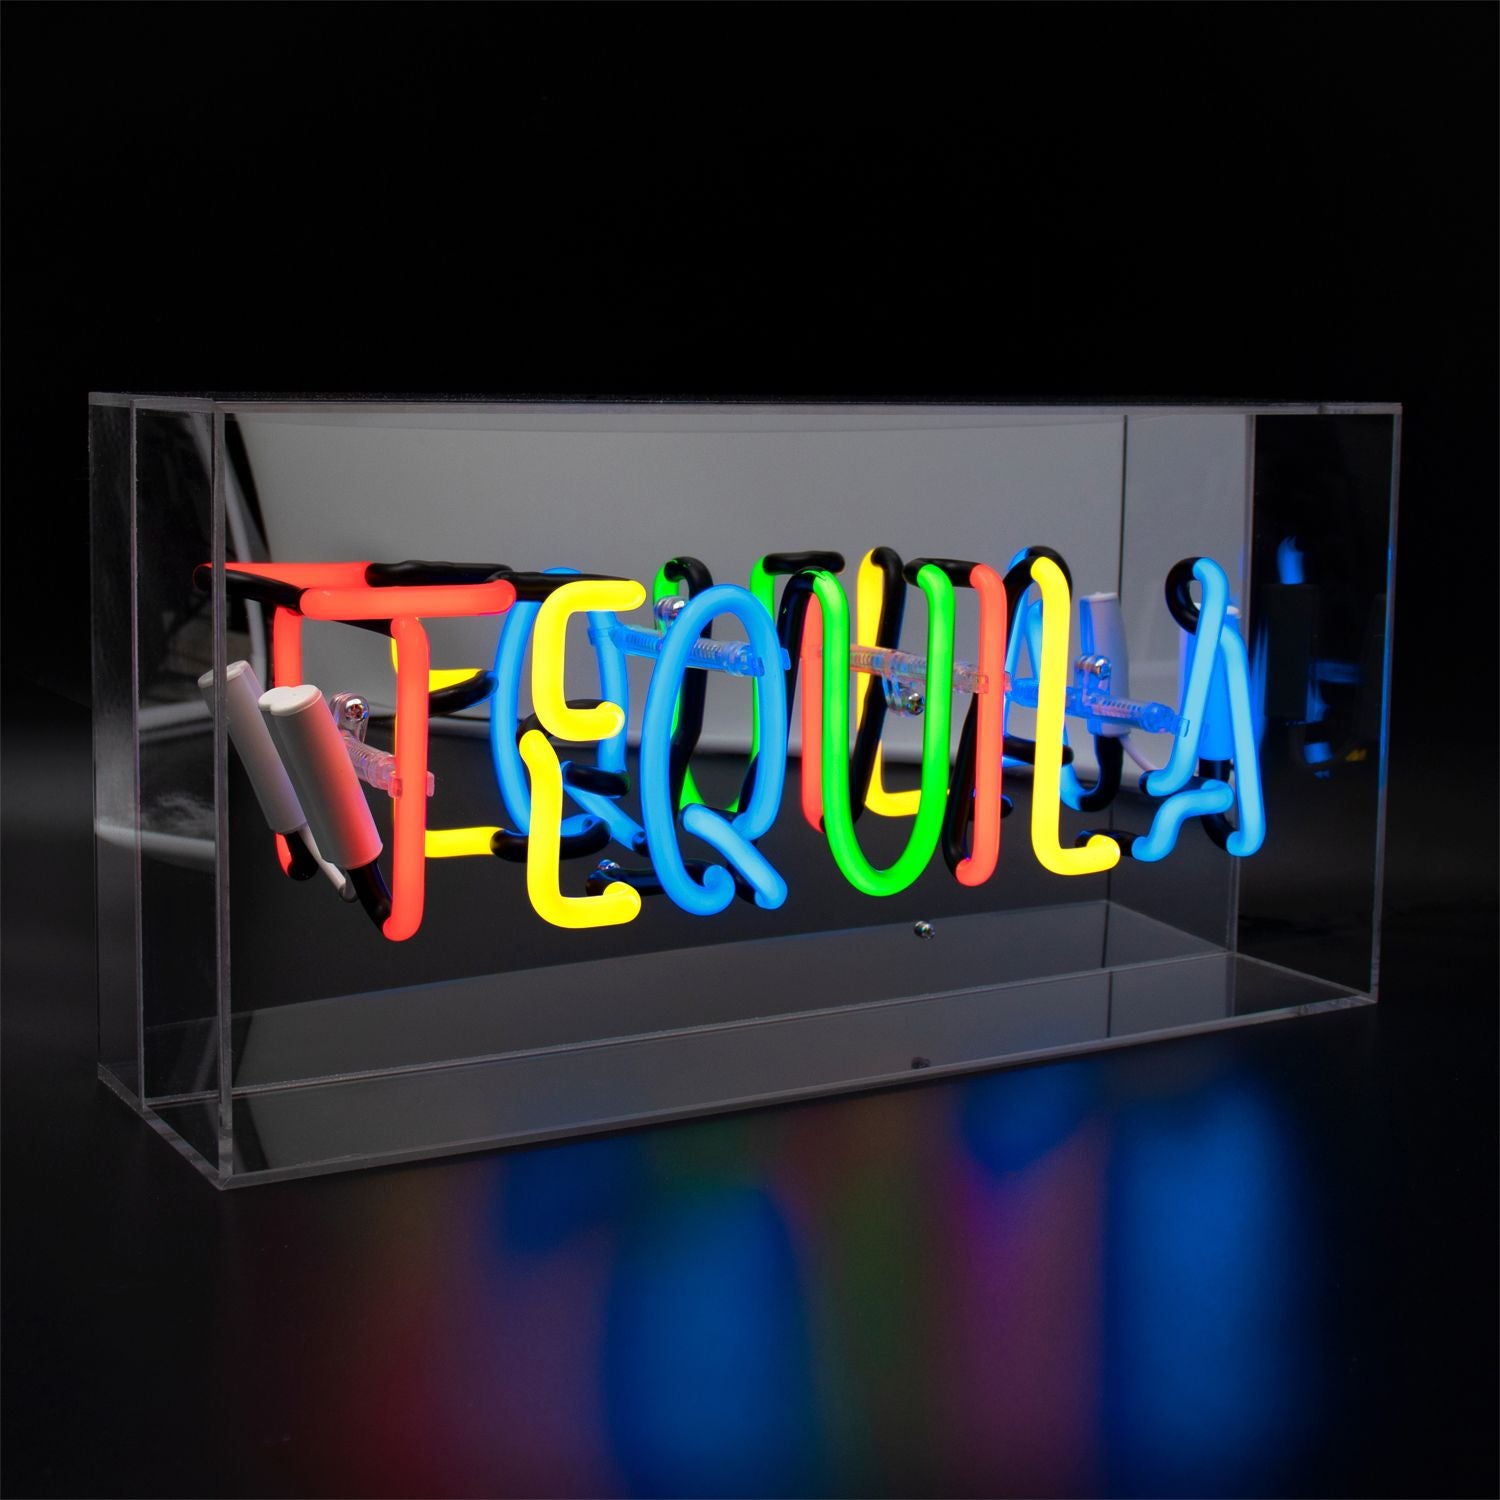 Tequila - Neon Box